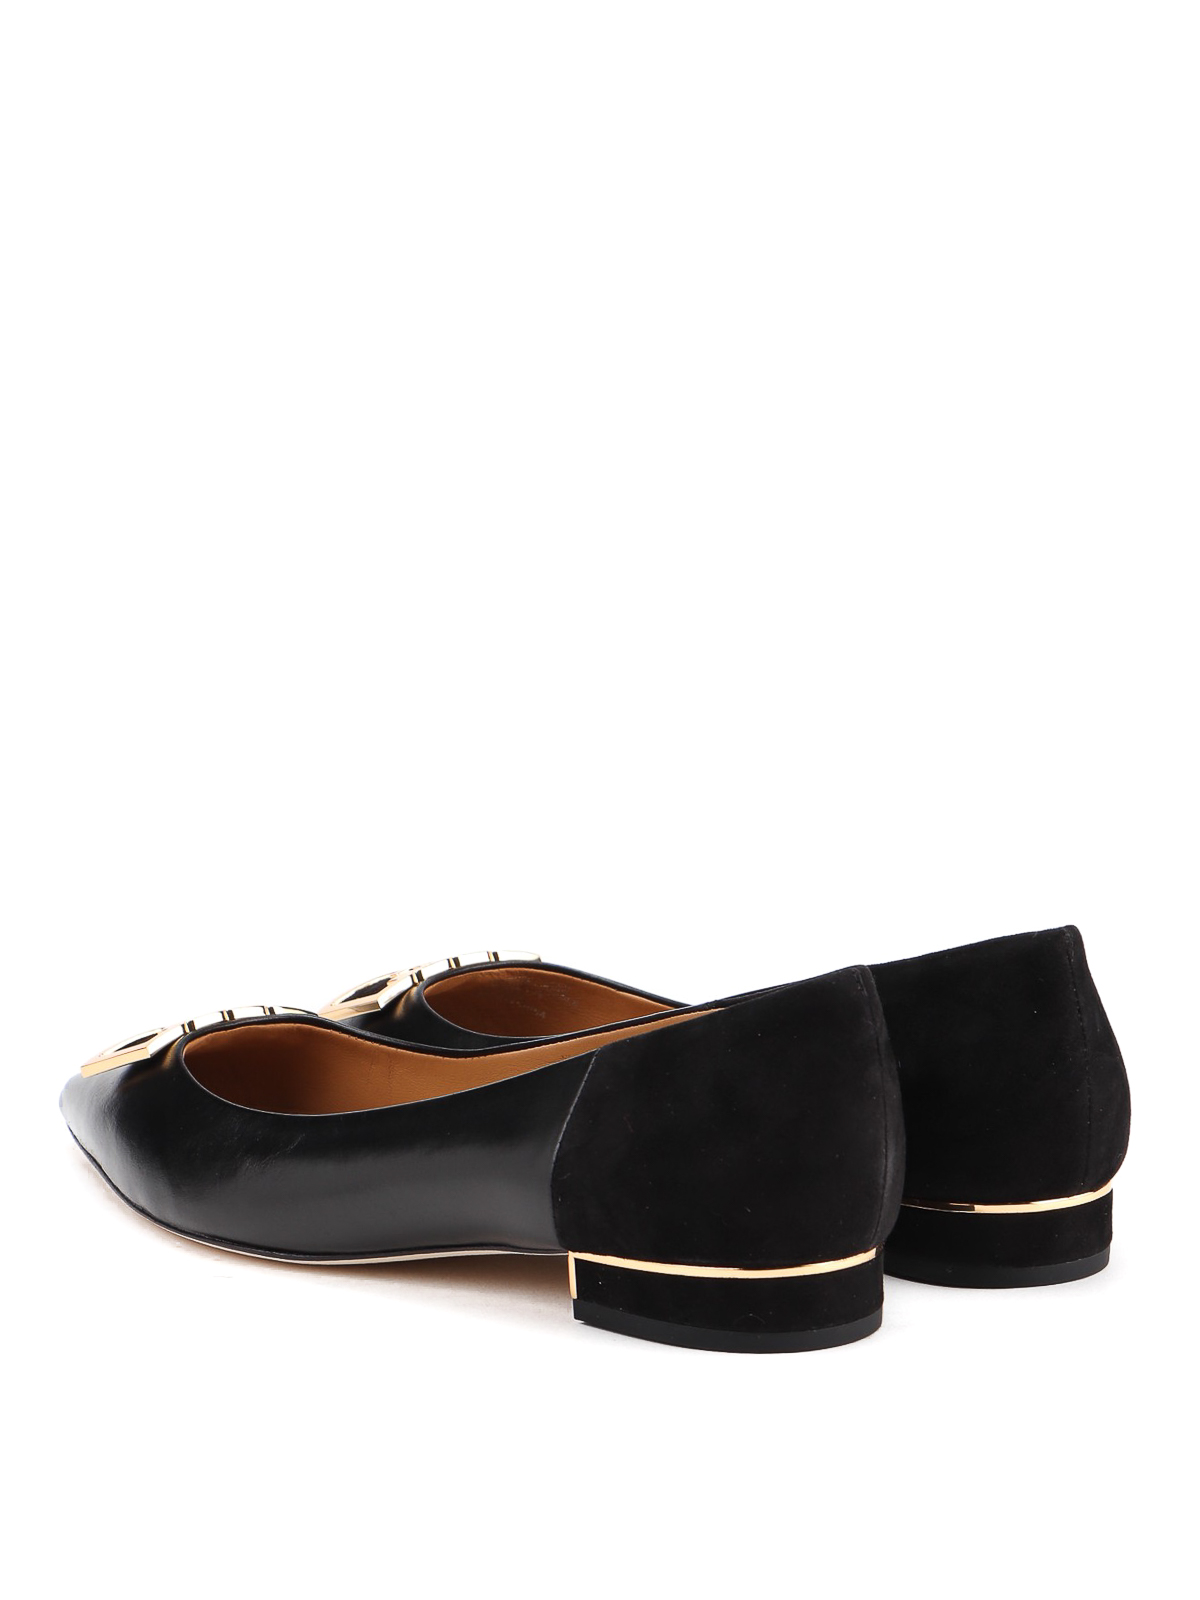 Flat shoes Tory Burch - Gigi 20 flats - 60316004 | Shop online at iKRIX